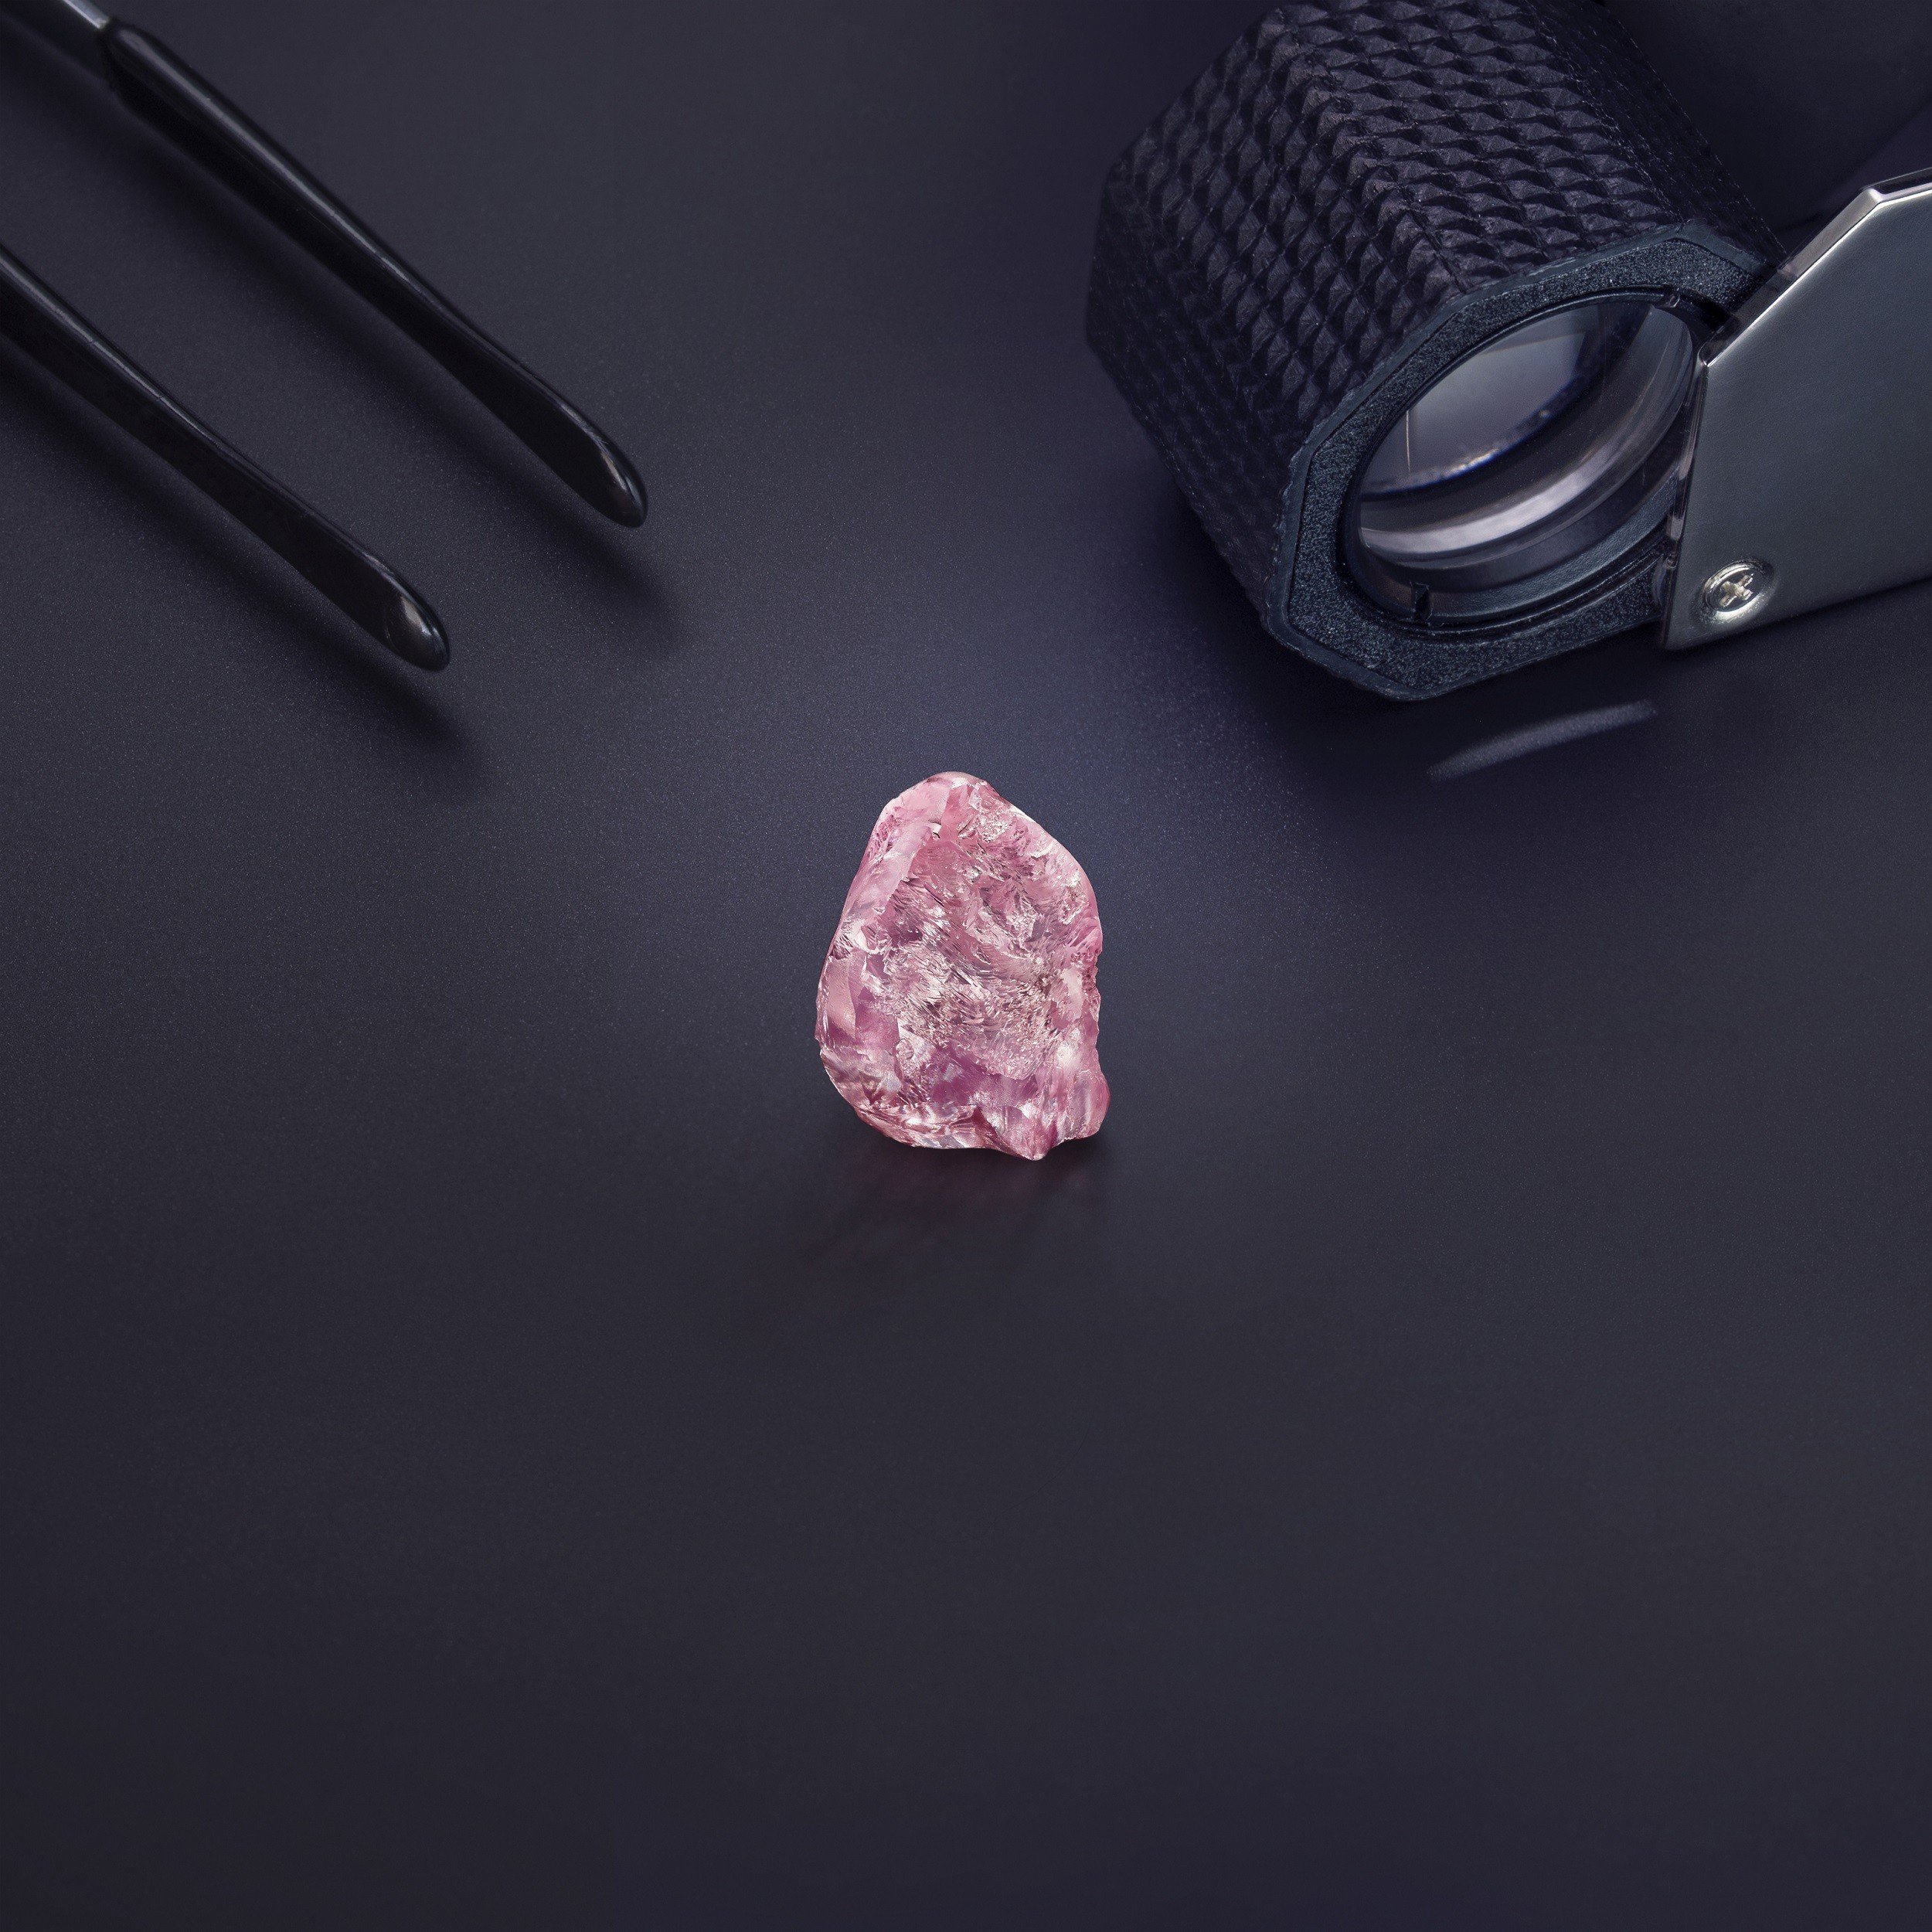 The 13.33ct Graff Lesotho pink diamond